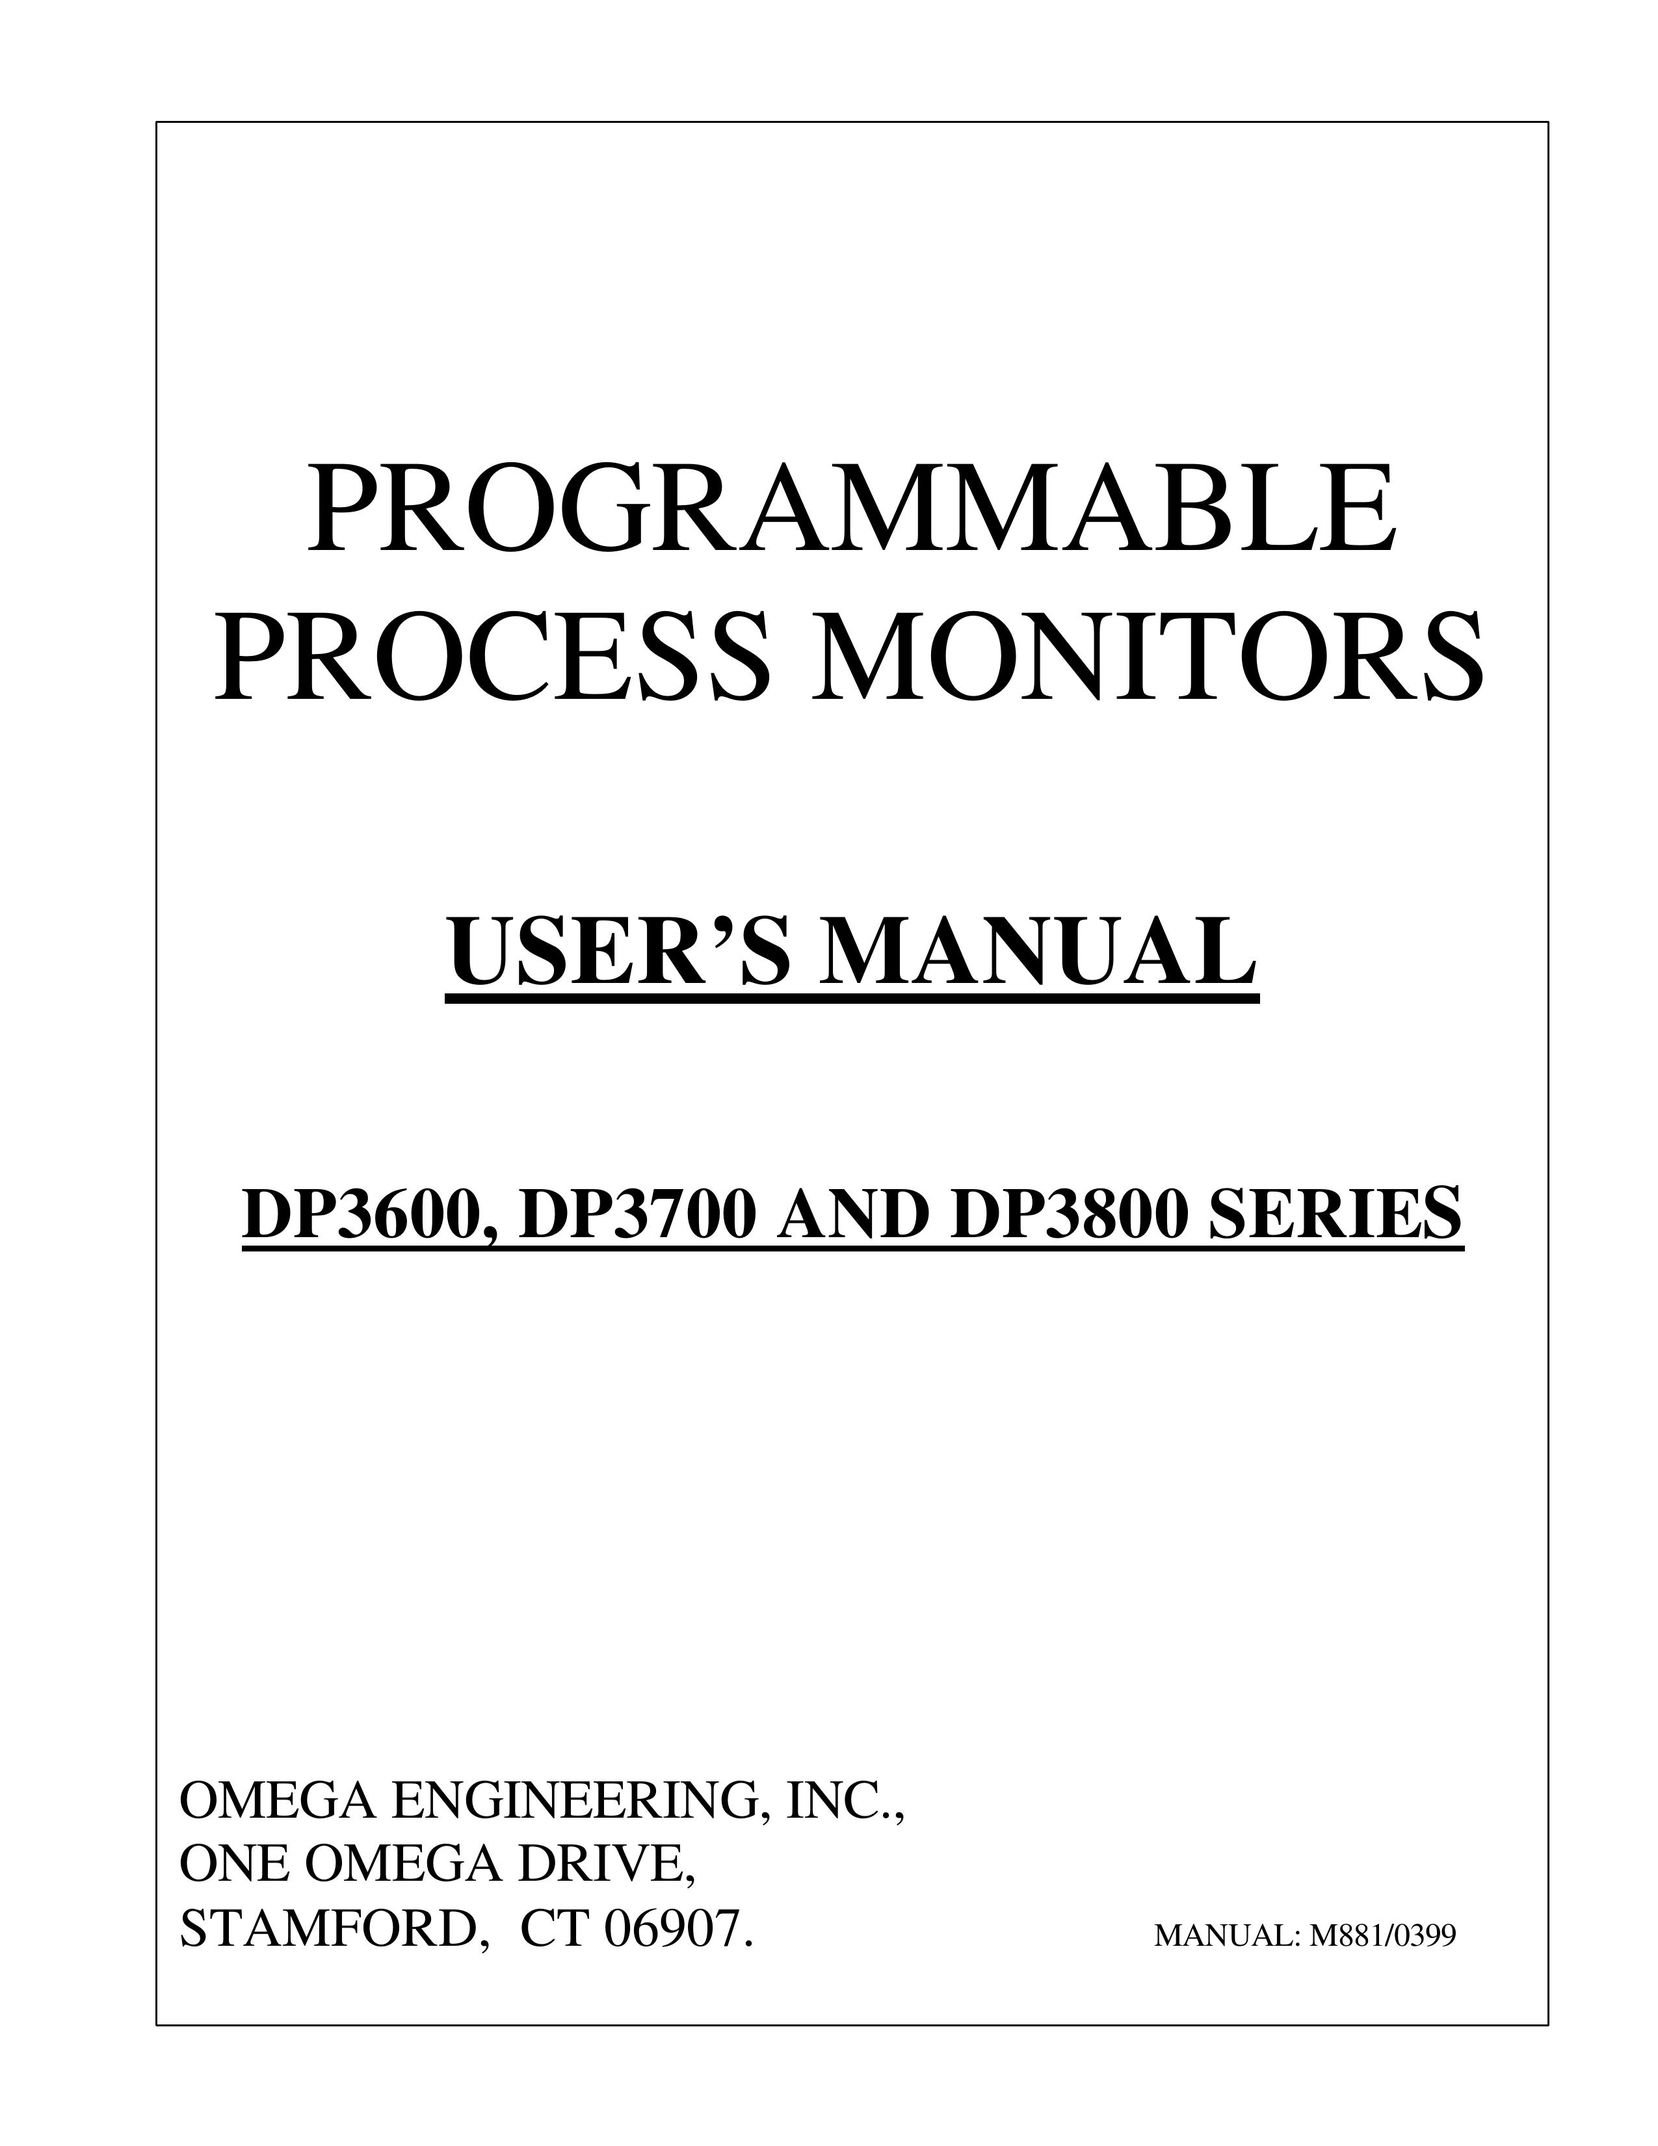 Omega Engineering DP3600 Computer Monitor User Manual